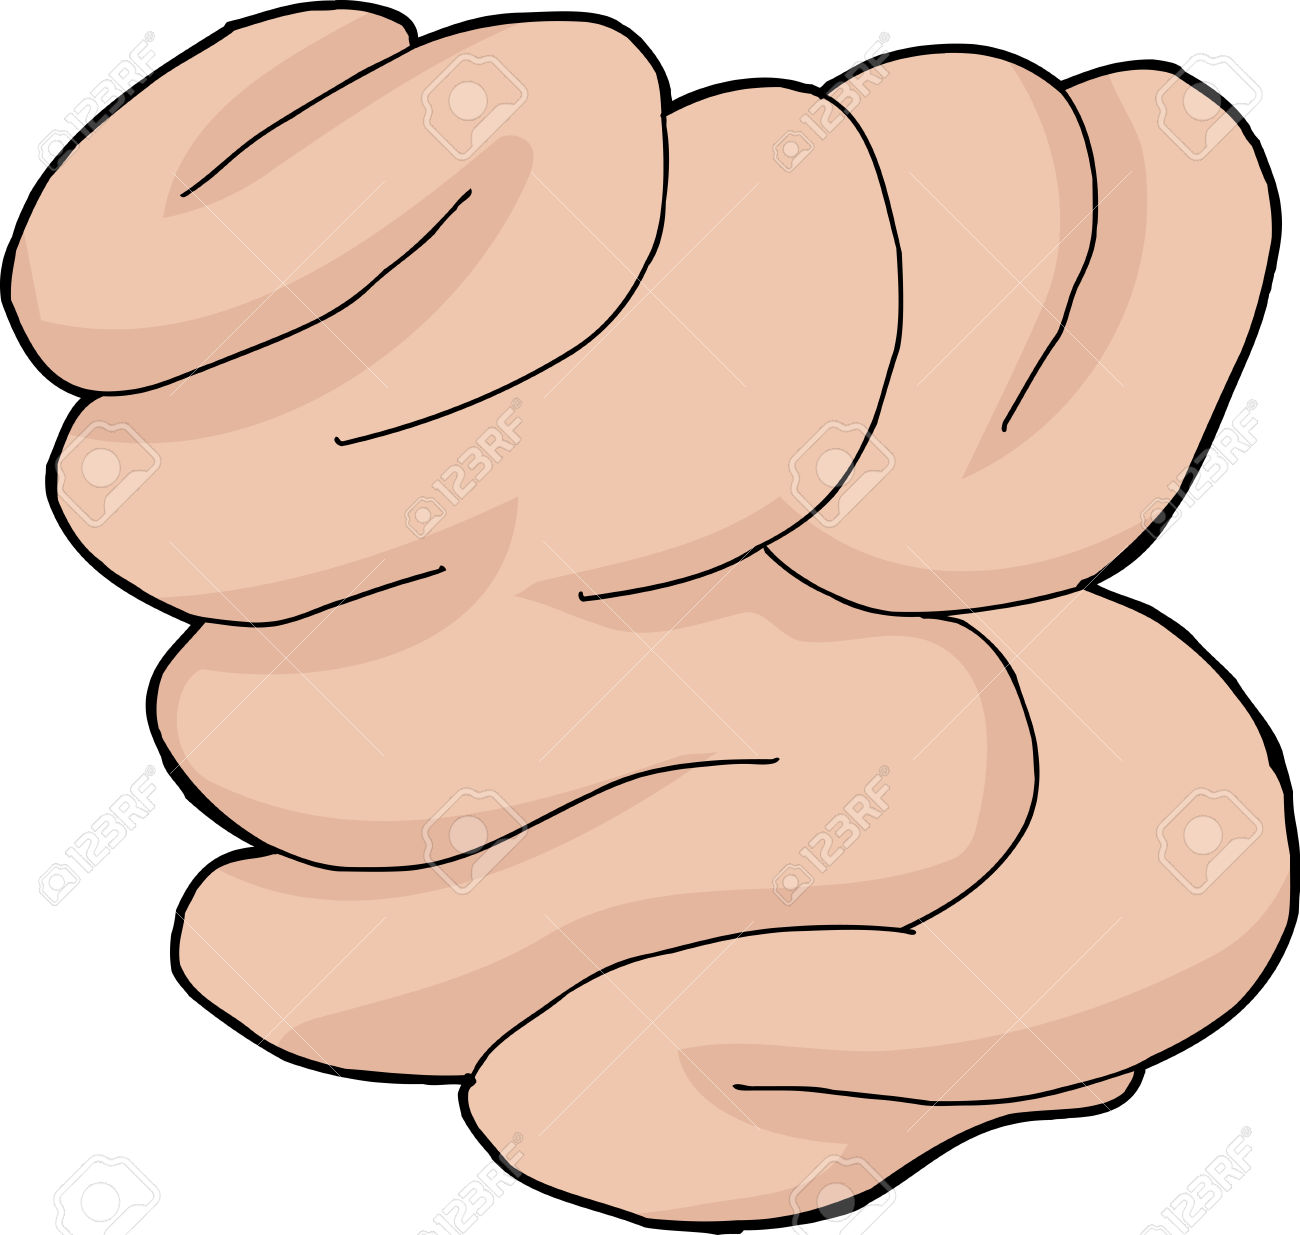 Isolated hand drawn human small intestine cartoon Stock Vector - 32186851